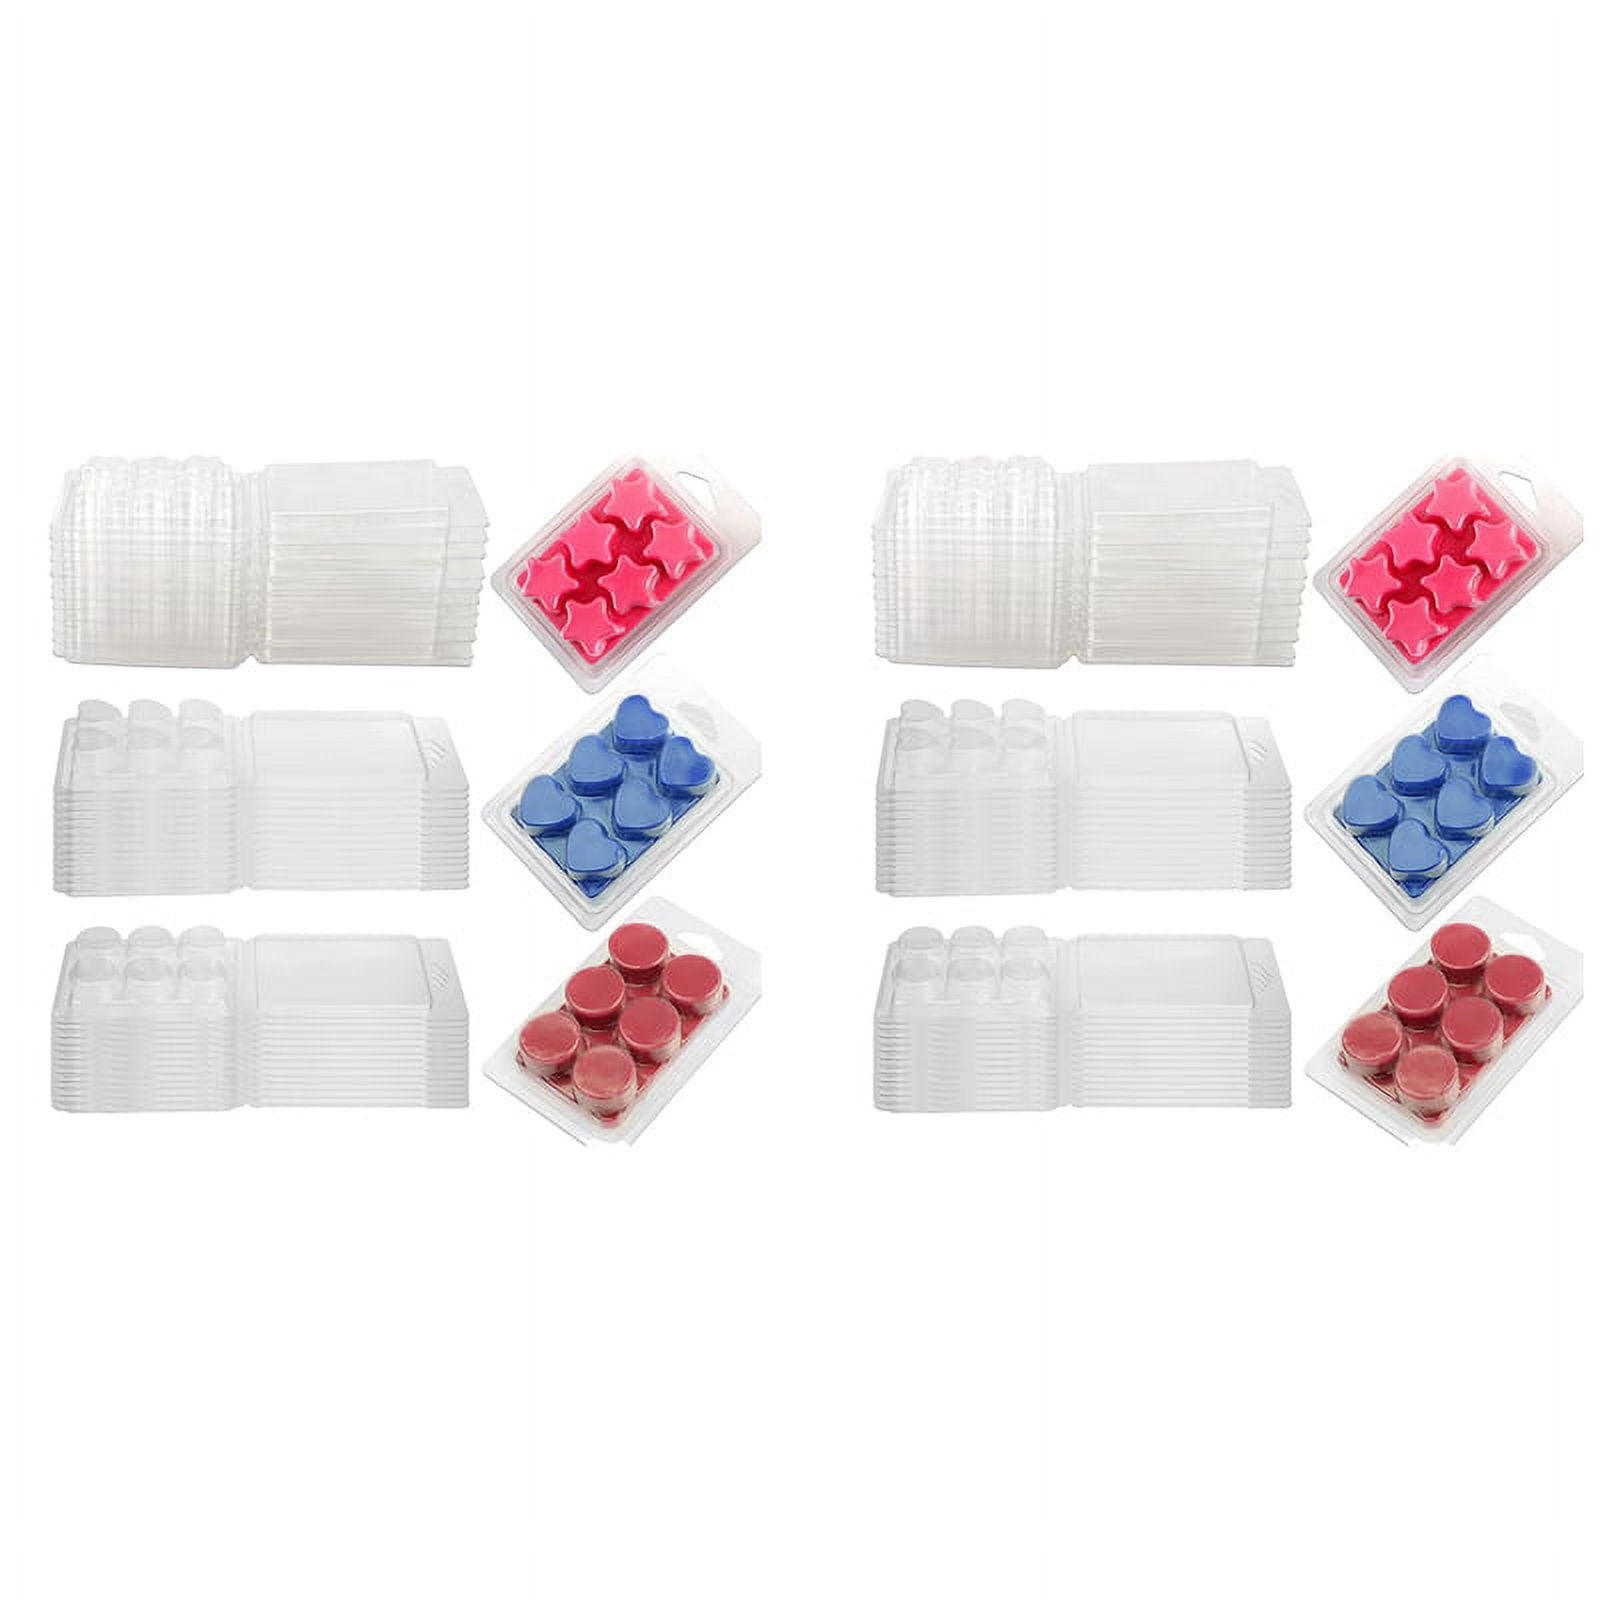 20 Wax Melt Molds Plastic Clamshells Box for Wickless Wax Melt